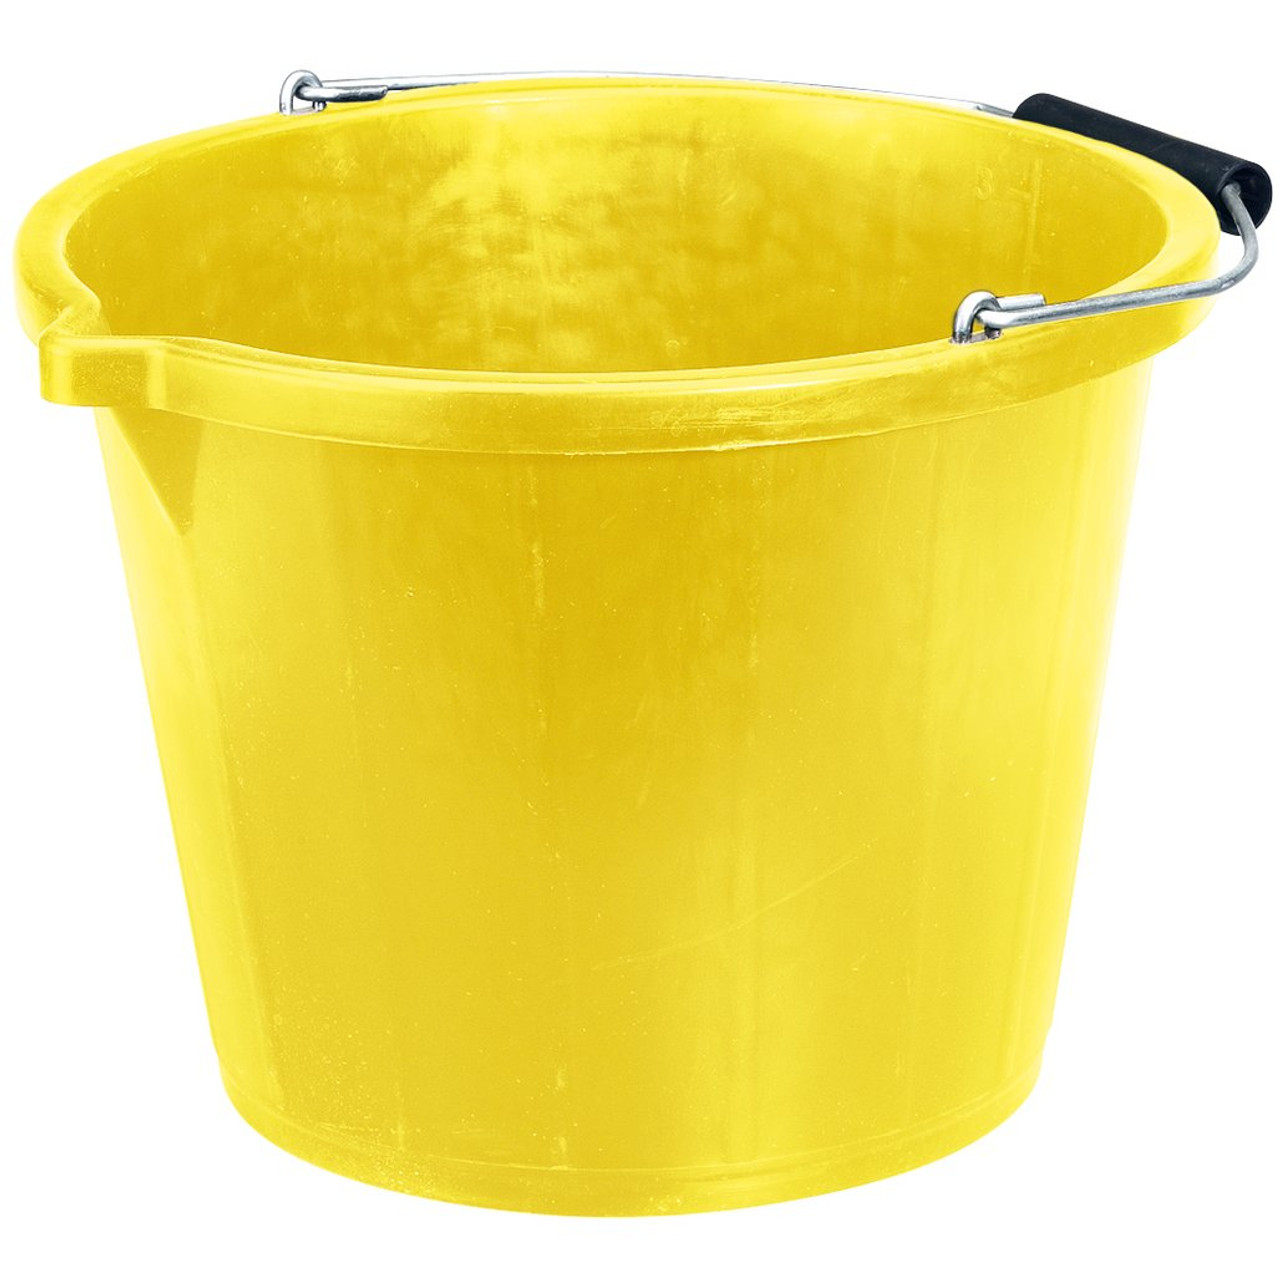 Draper Yellow Bucket 14.8ltr